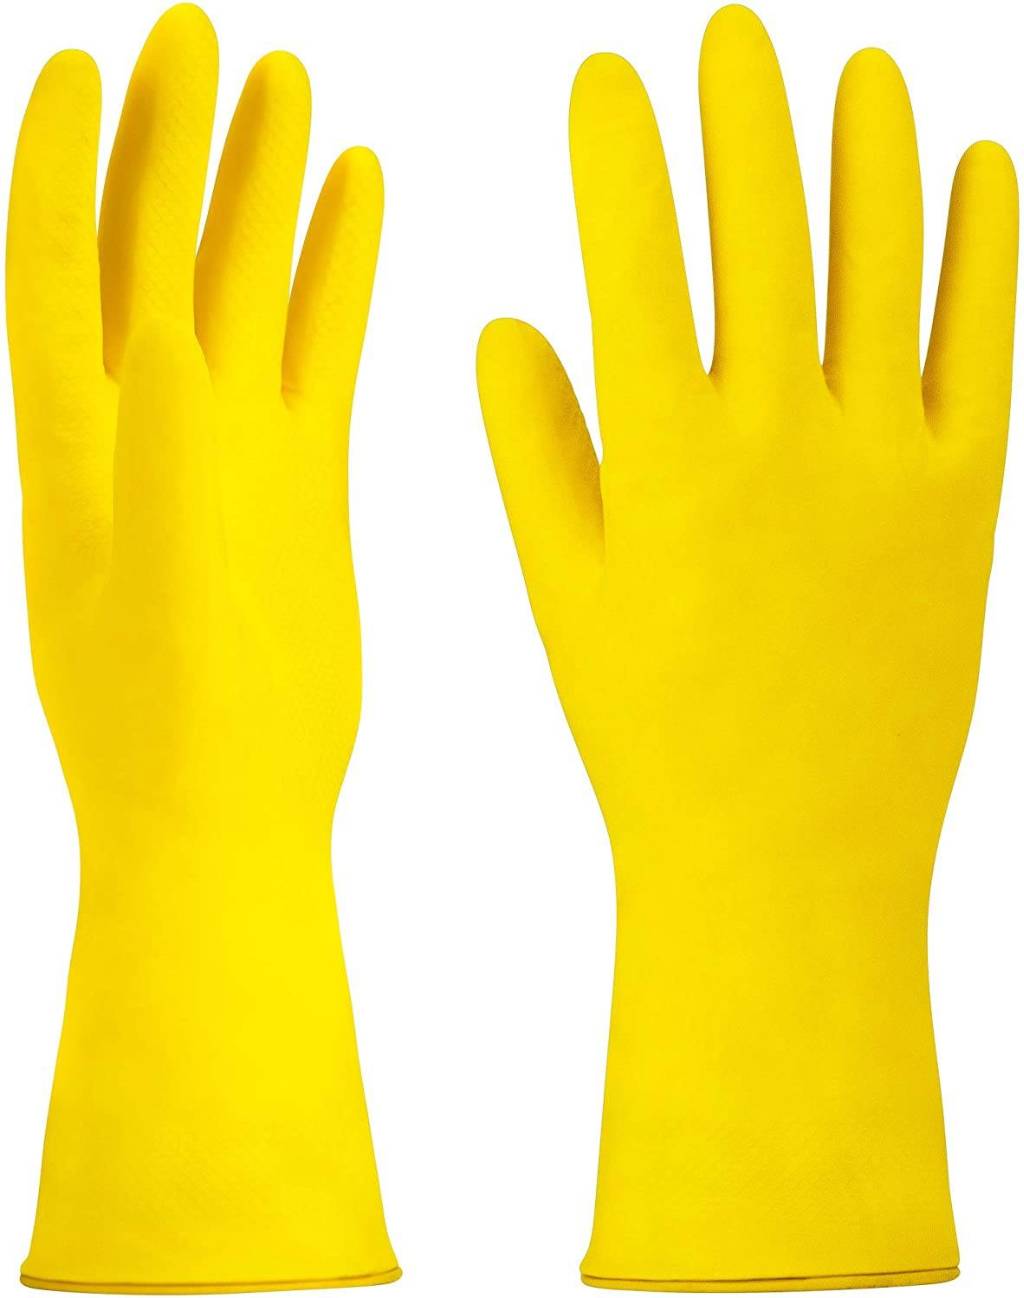 Rubber Save Gloves from Virus বাংলাদেশ - 1143240